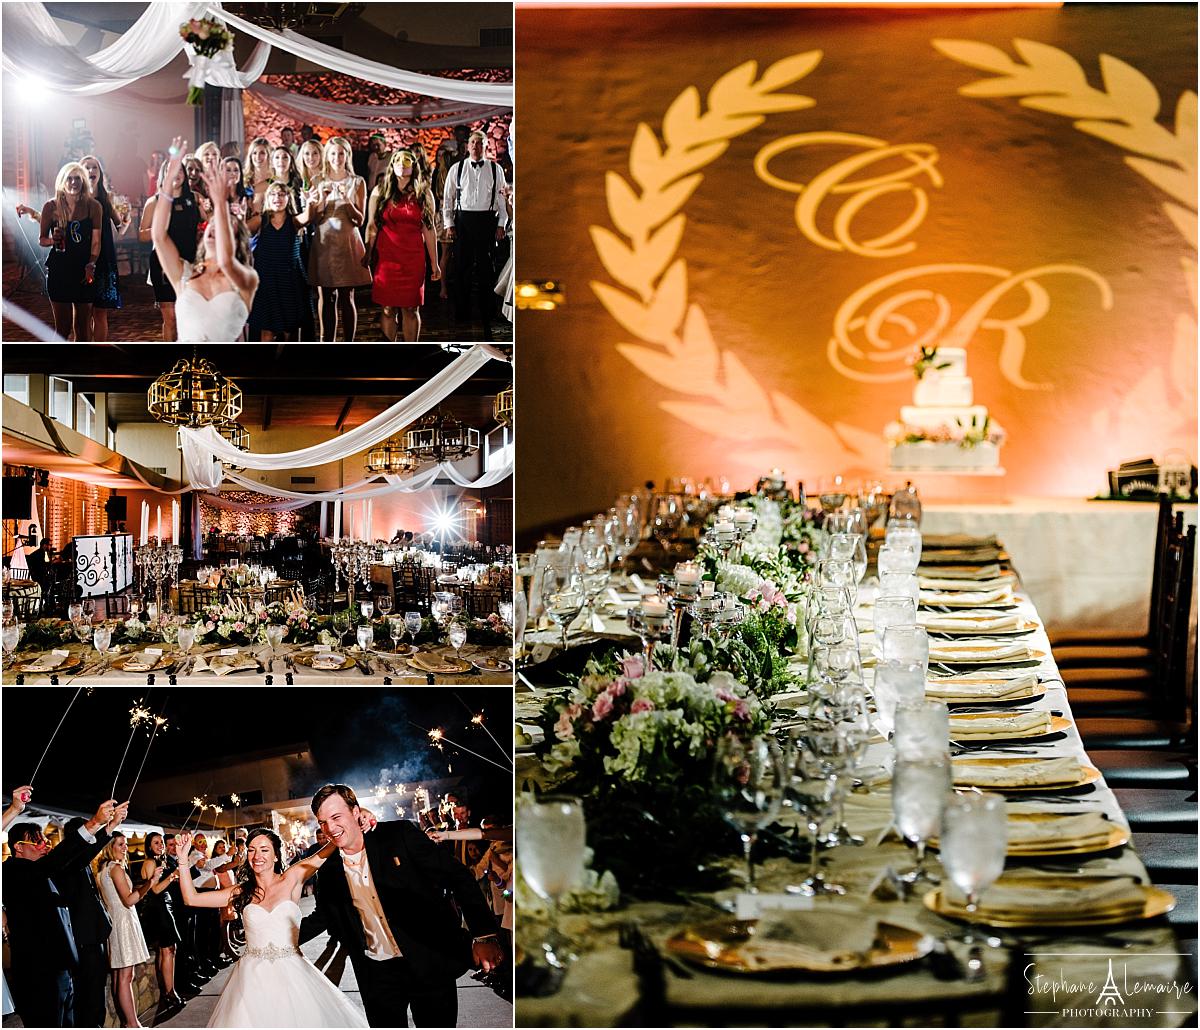 Wedding reception at Coronado country club wedding venue in el paso texas by stephane lemaire photography